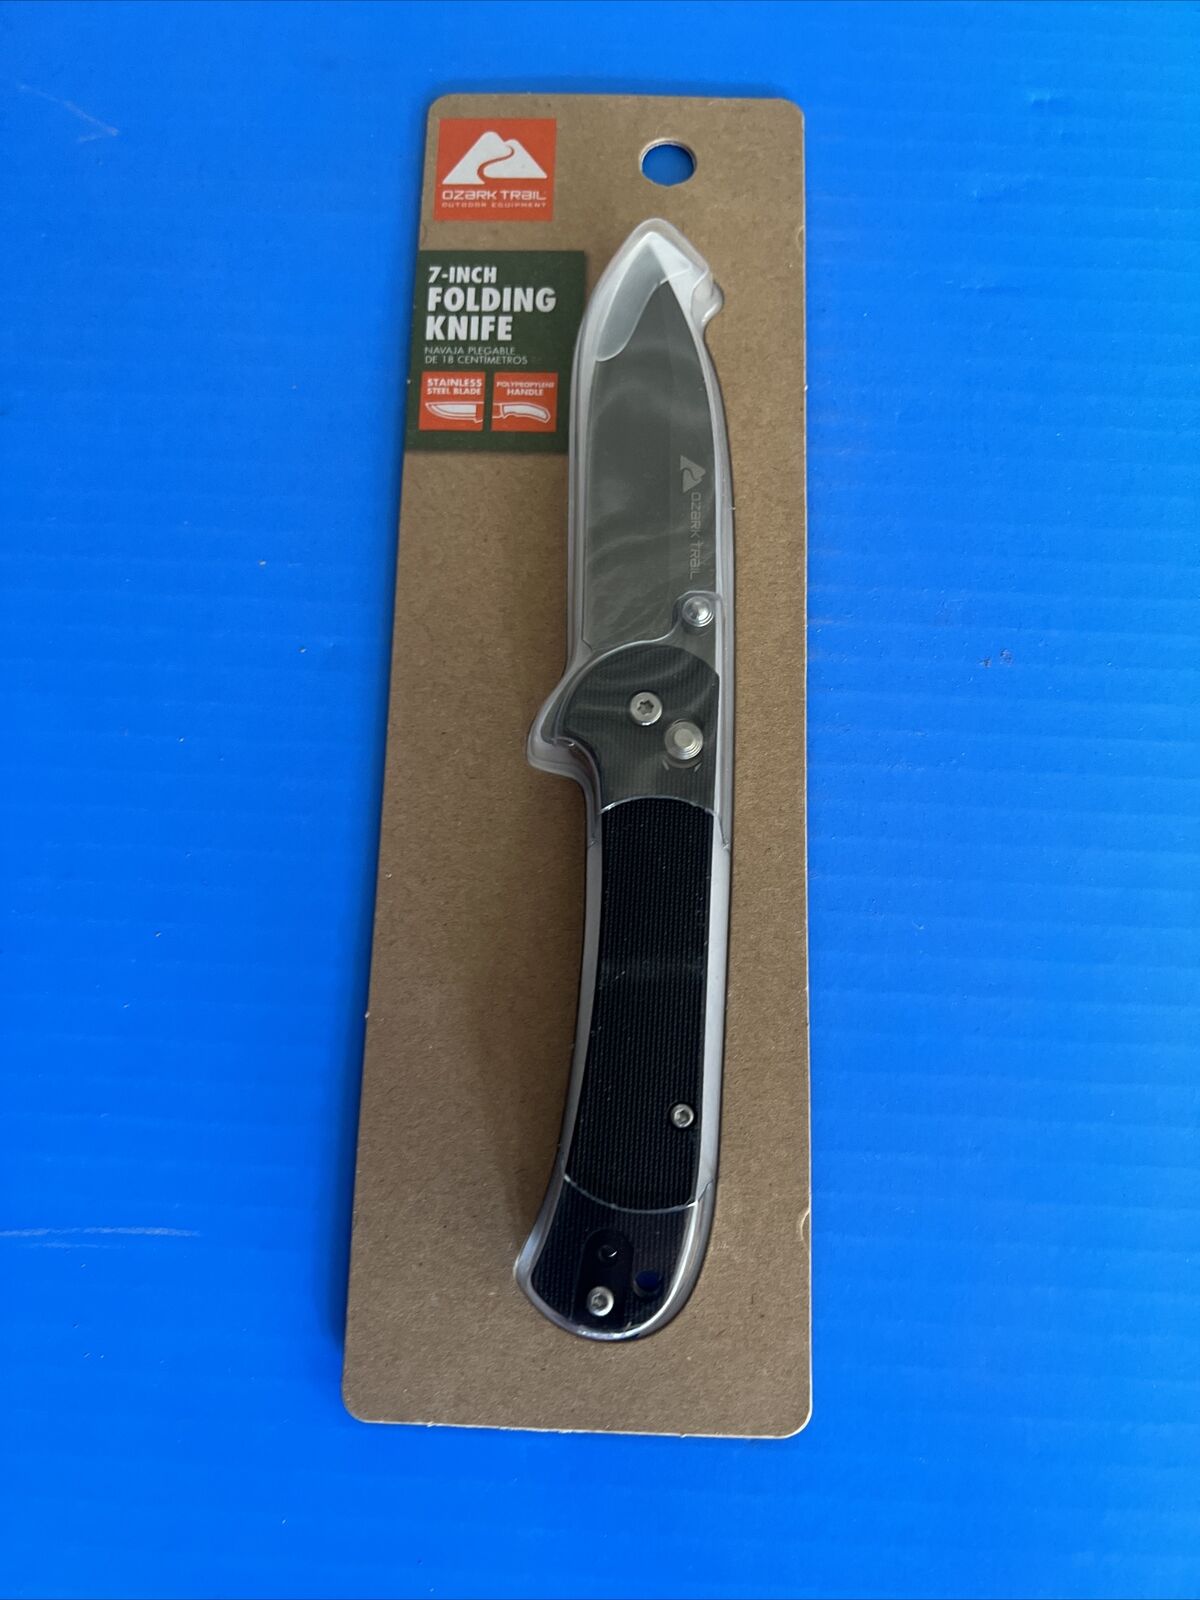 Ozark Trail 7 Inch Folding Knife (Black) New